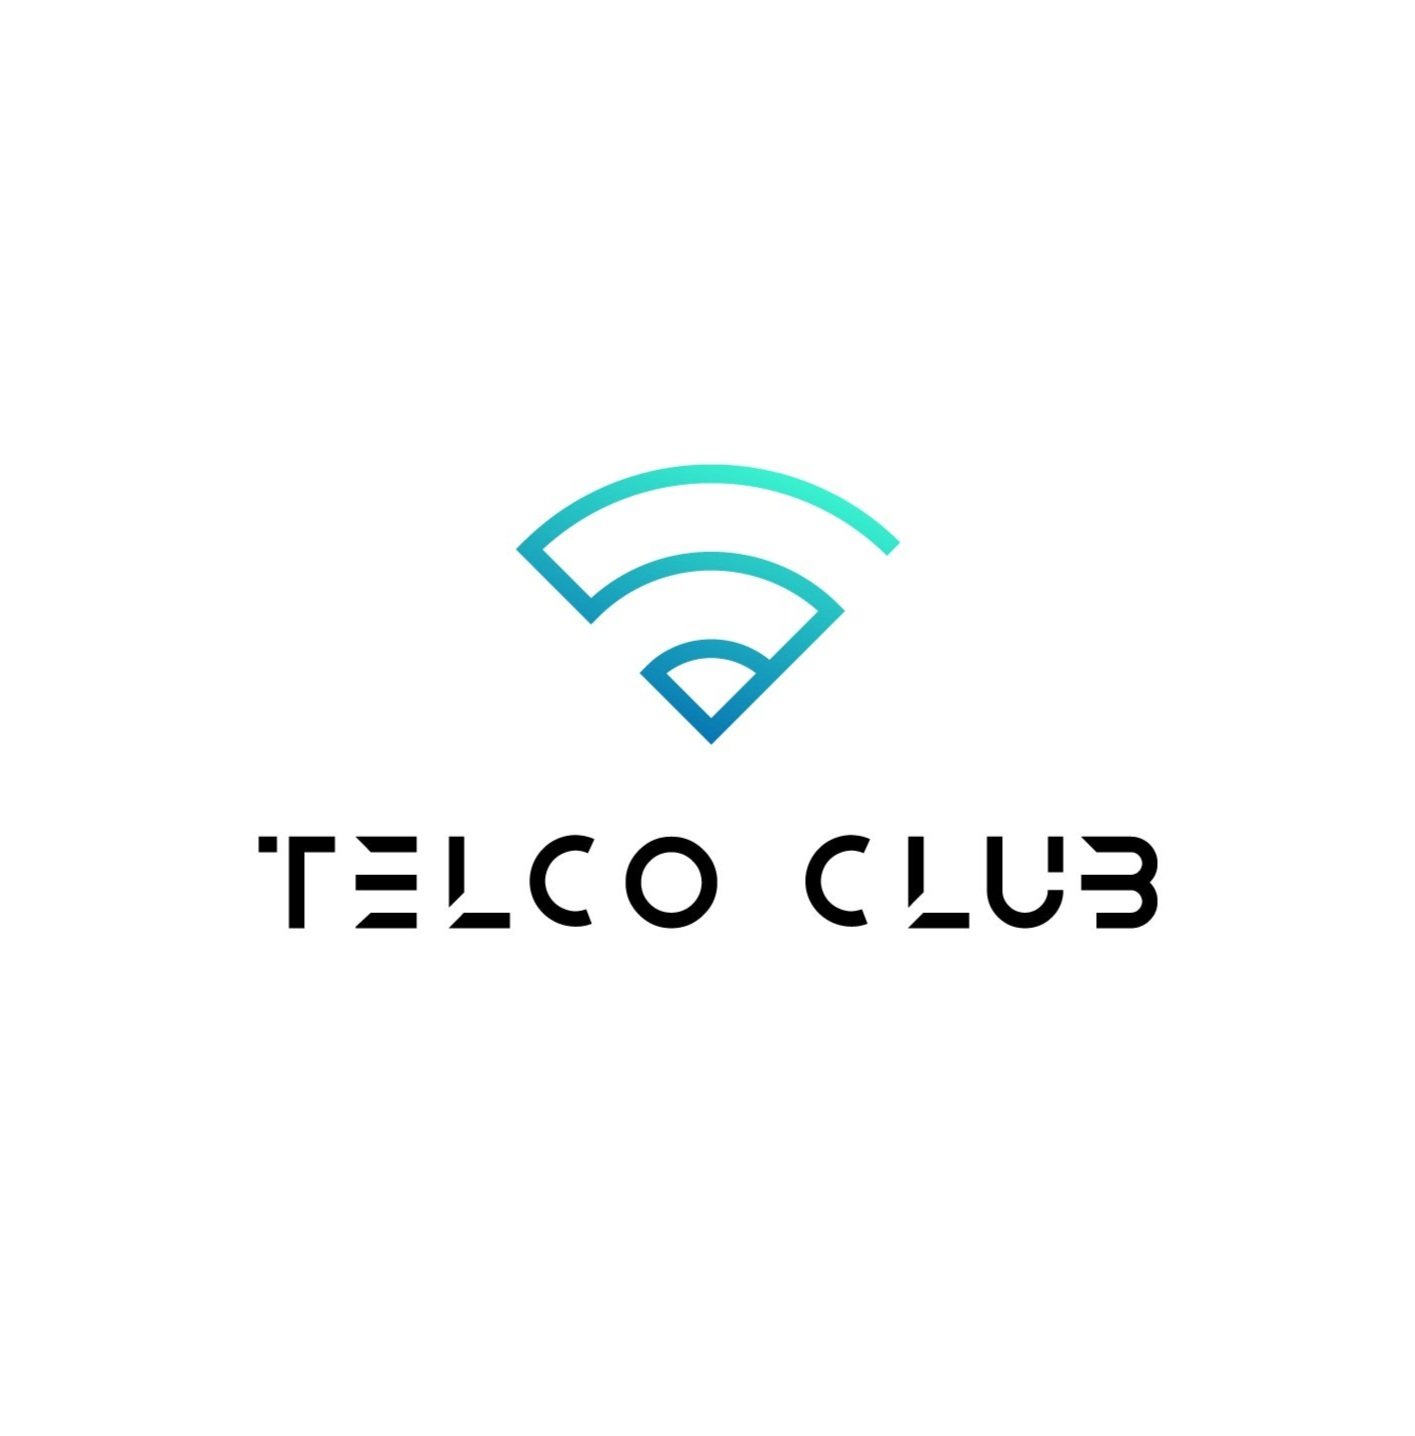 Telco Club 北美电信俱乐部